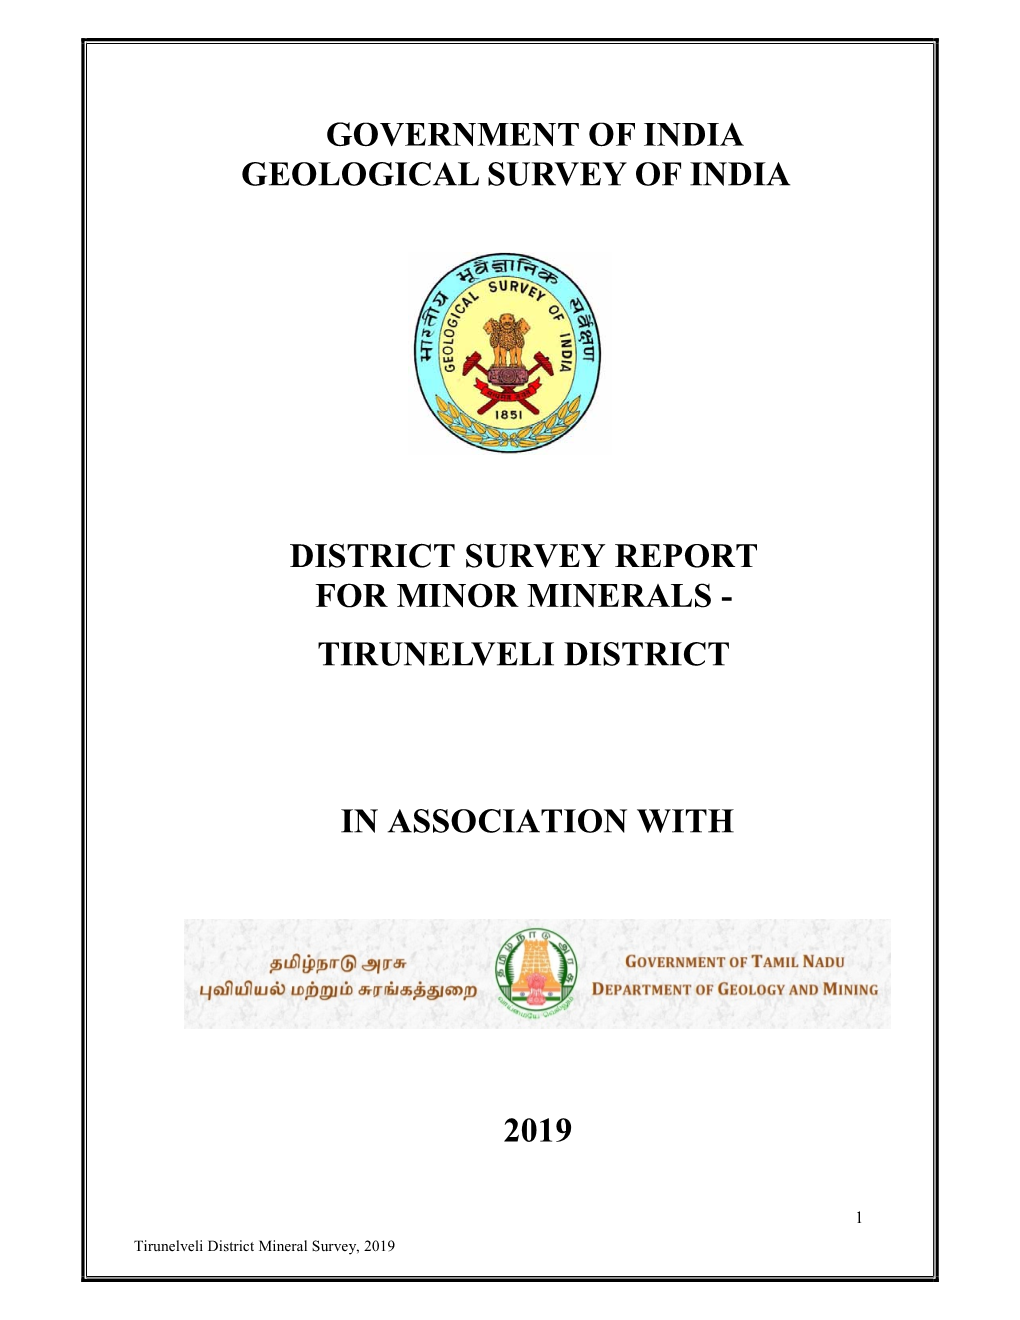 Tirunelveli District in Association